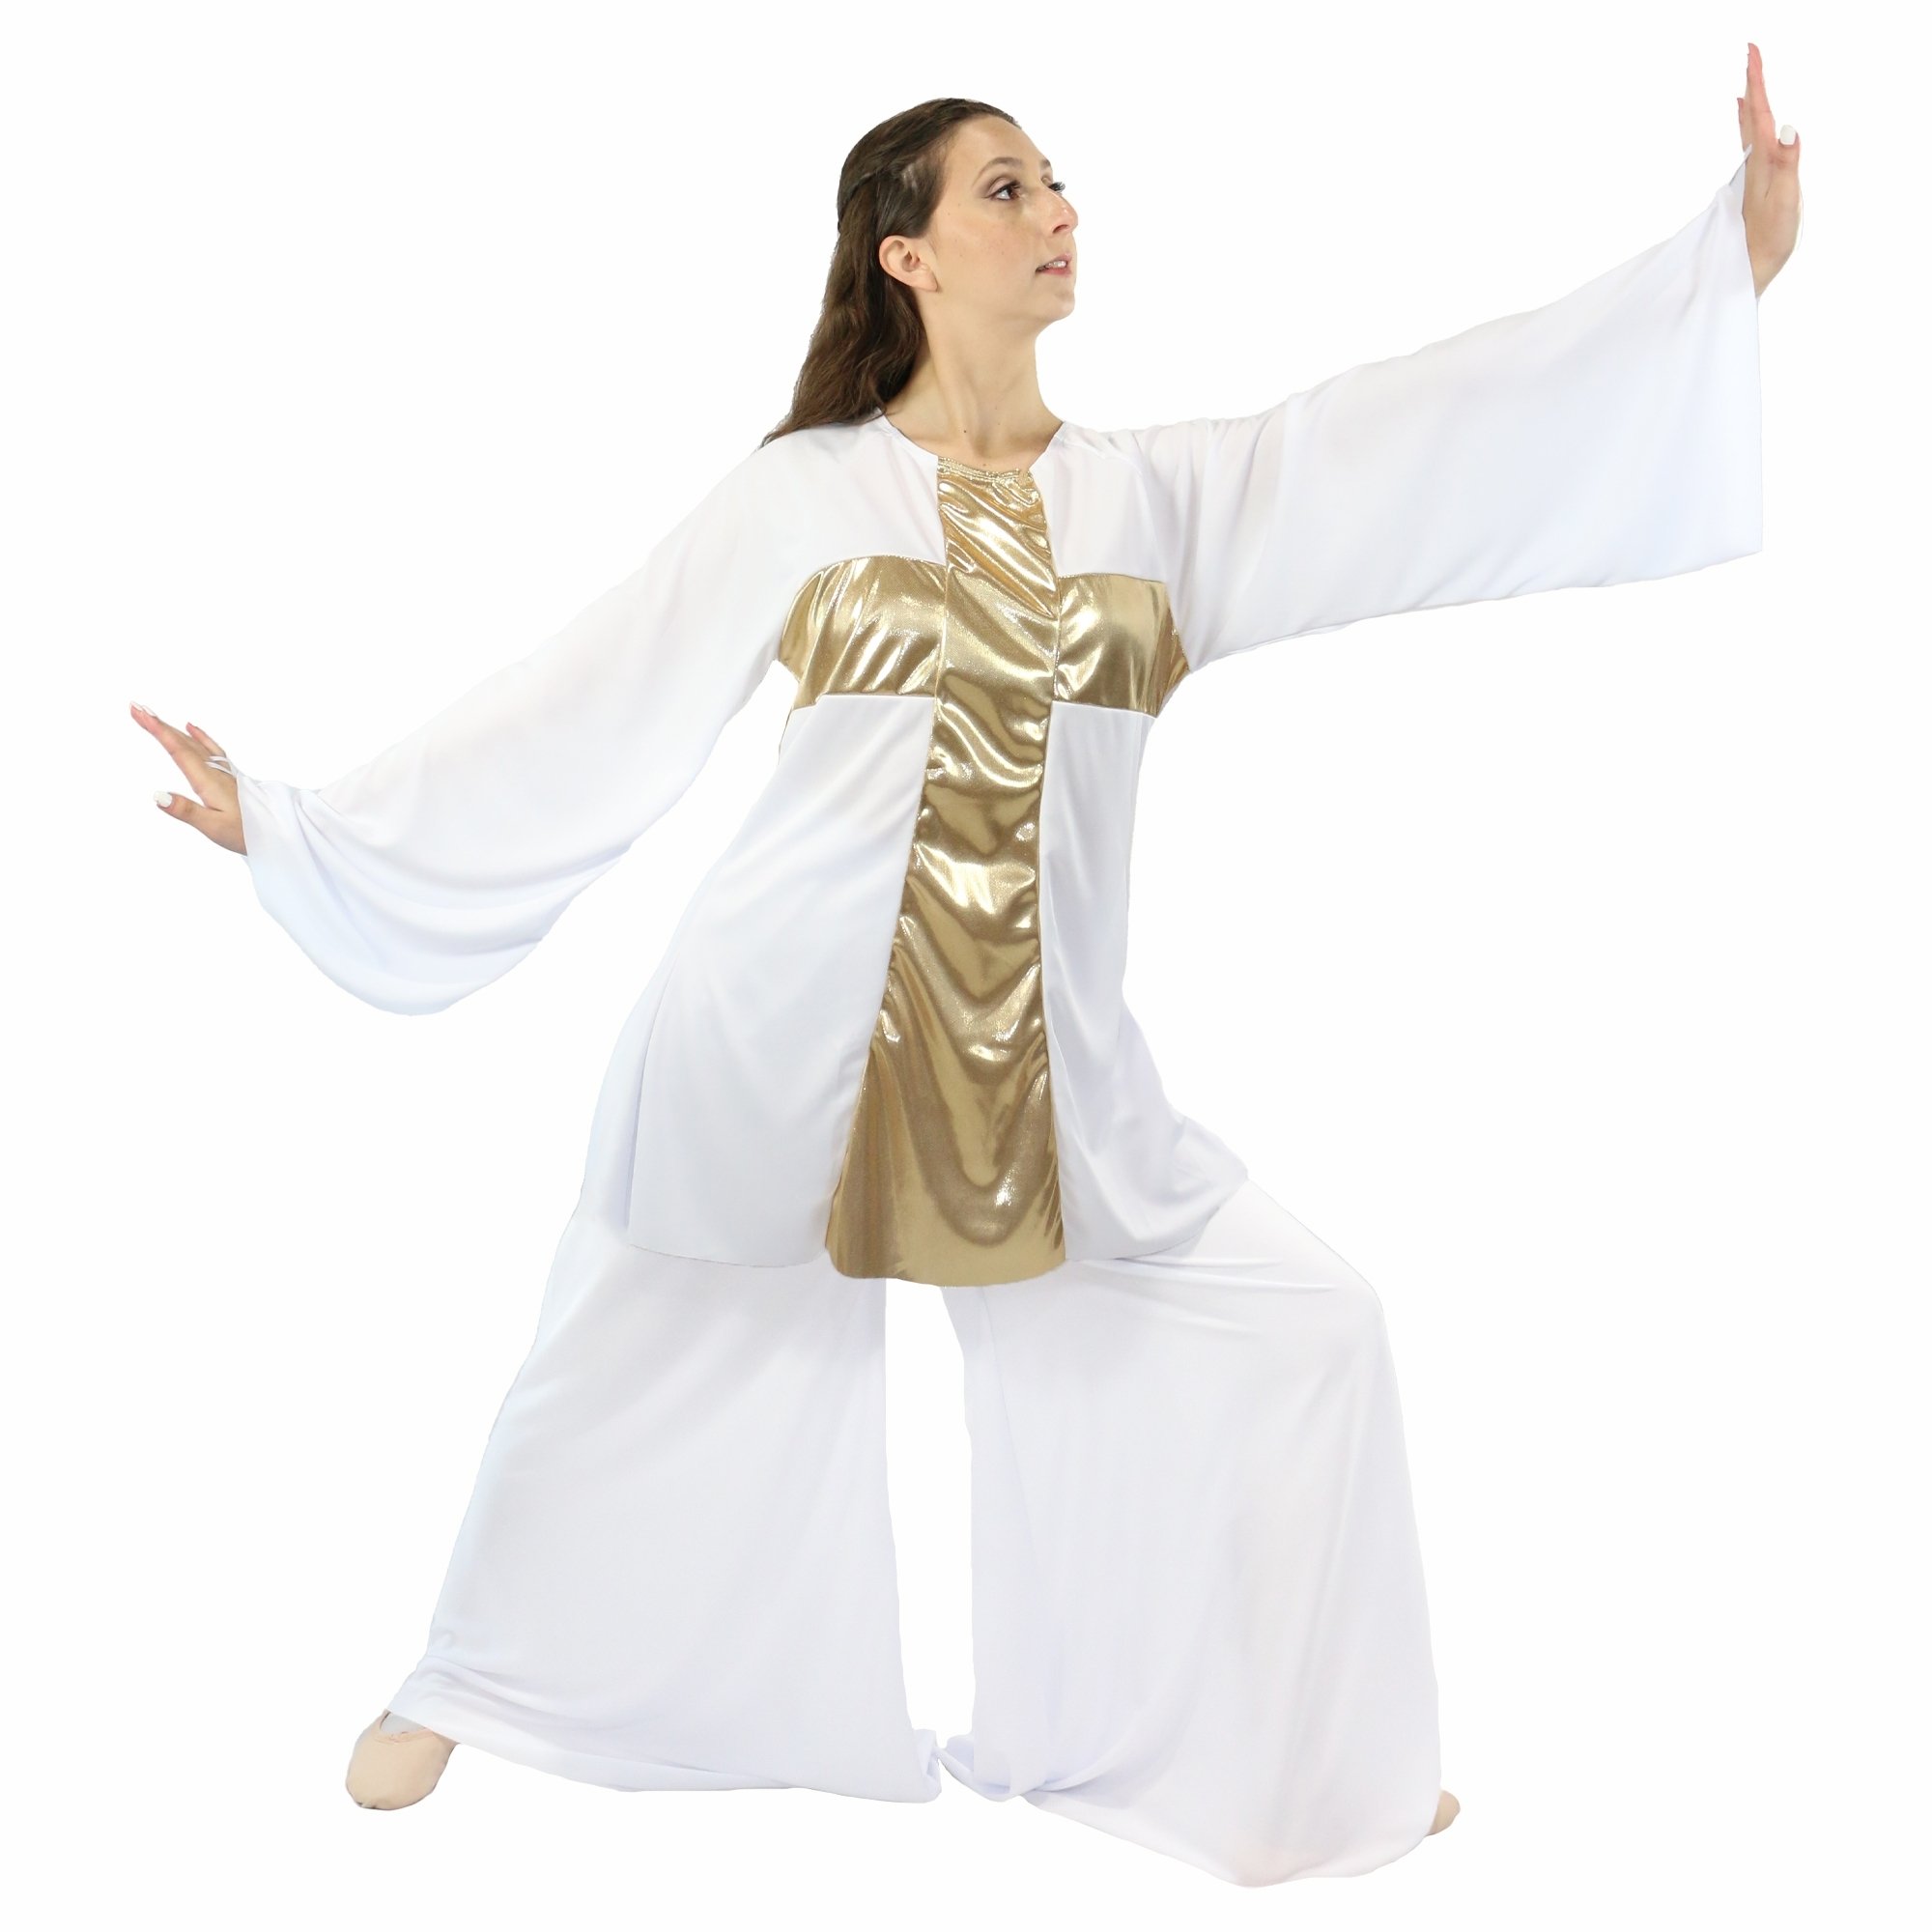 Danzcue Worship Praise Dance Cross Pullover Top